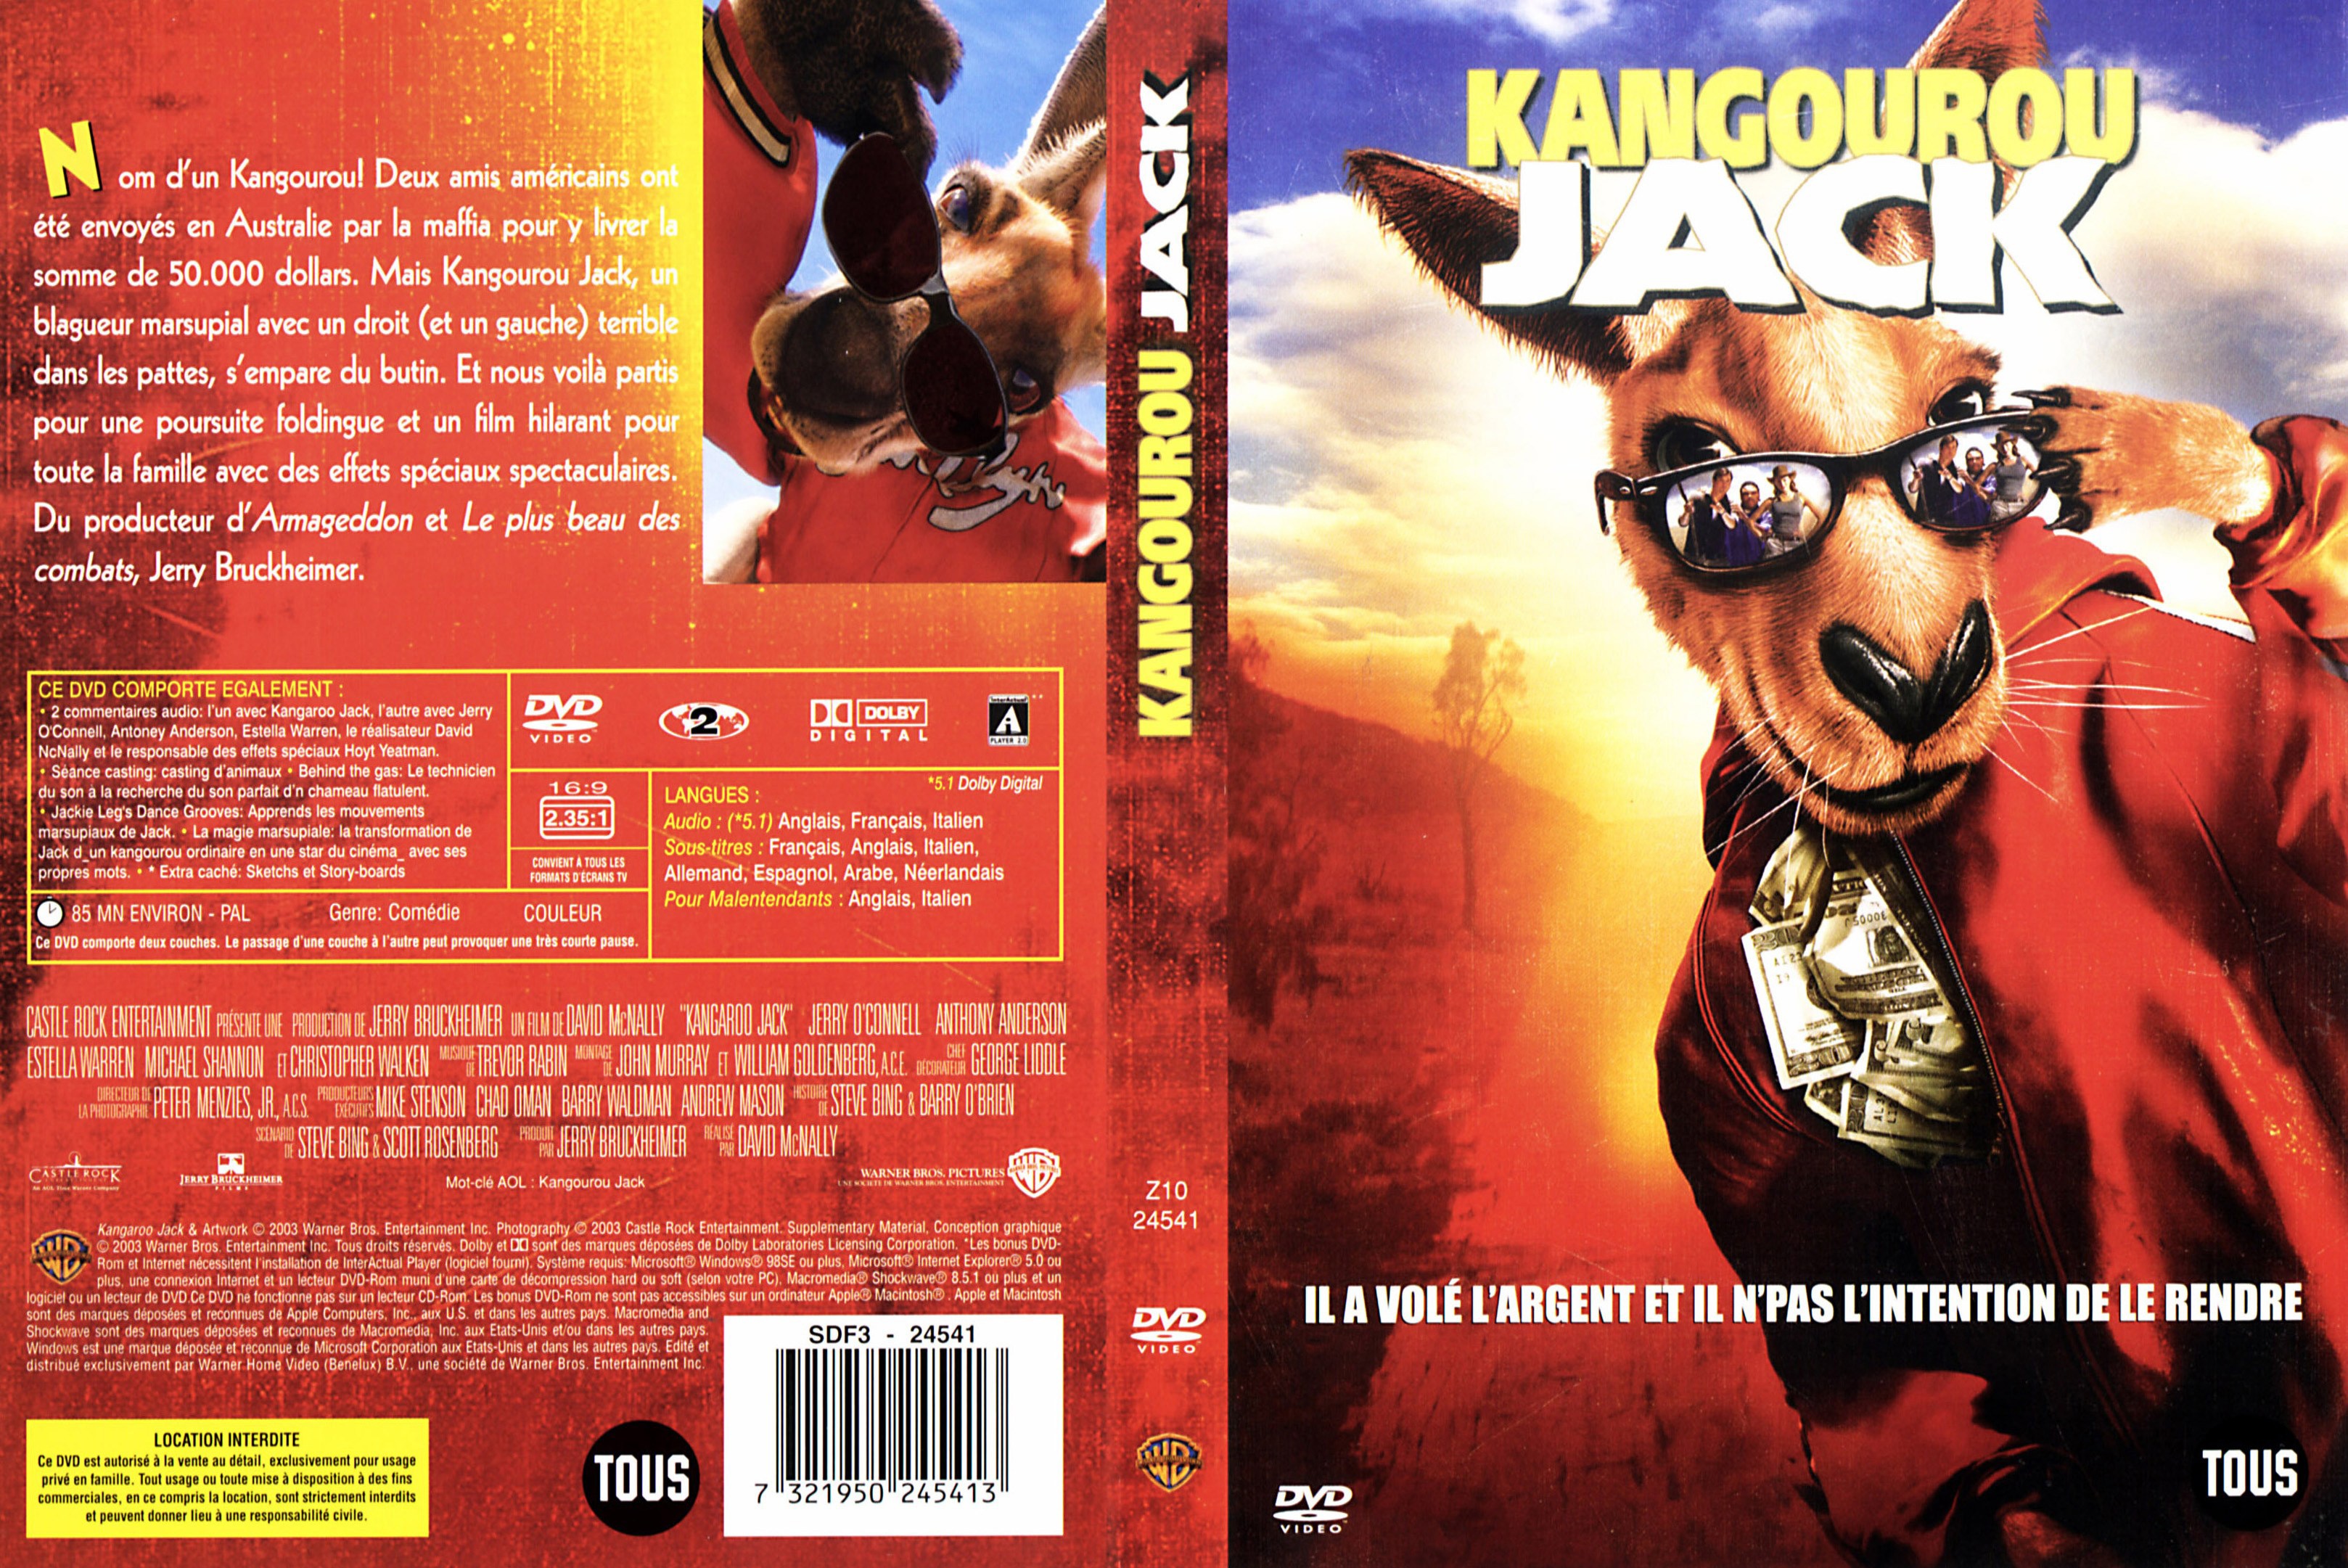 Jaquette DVD kangourou jack v2